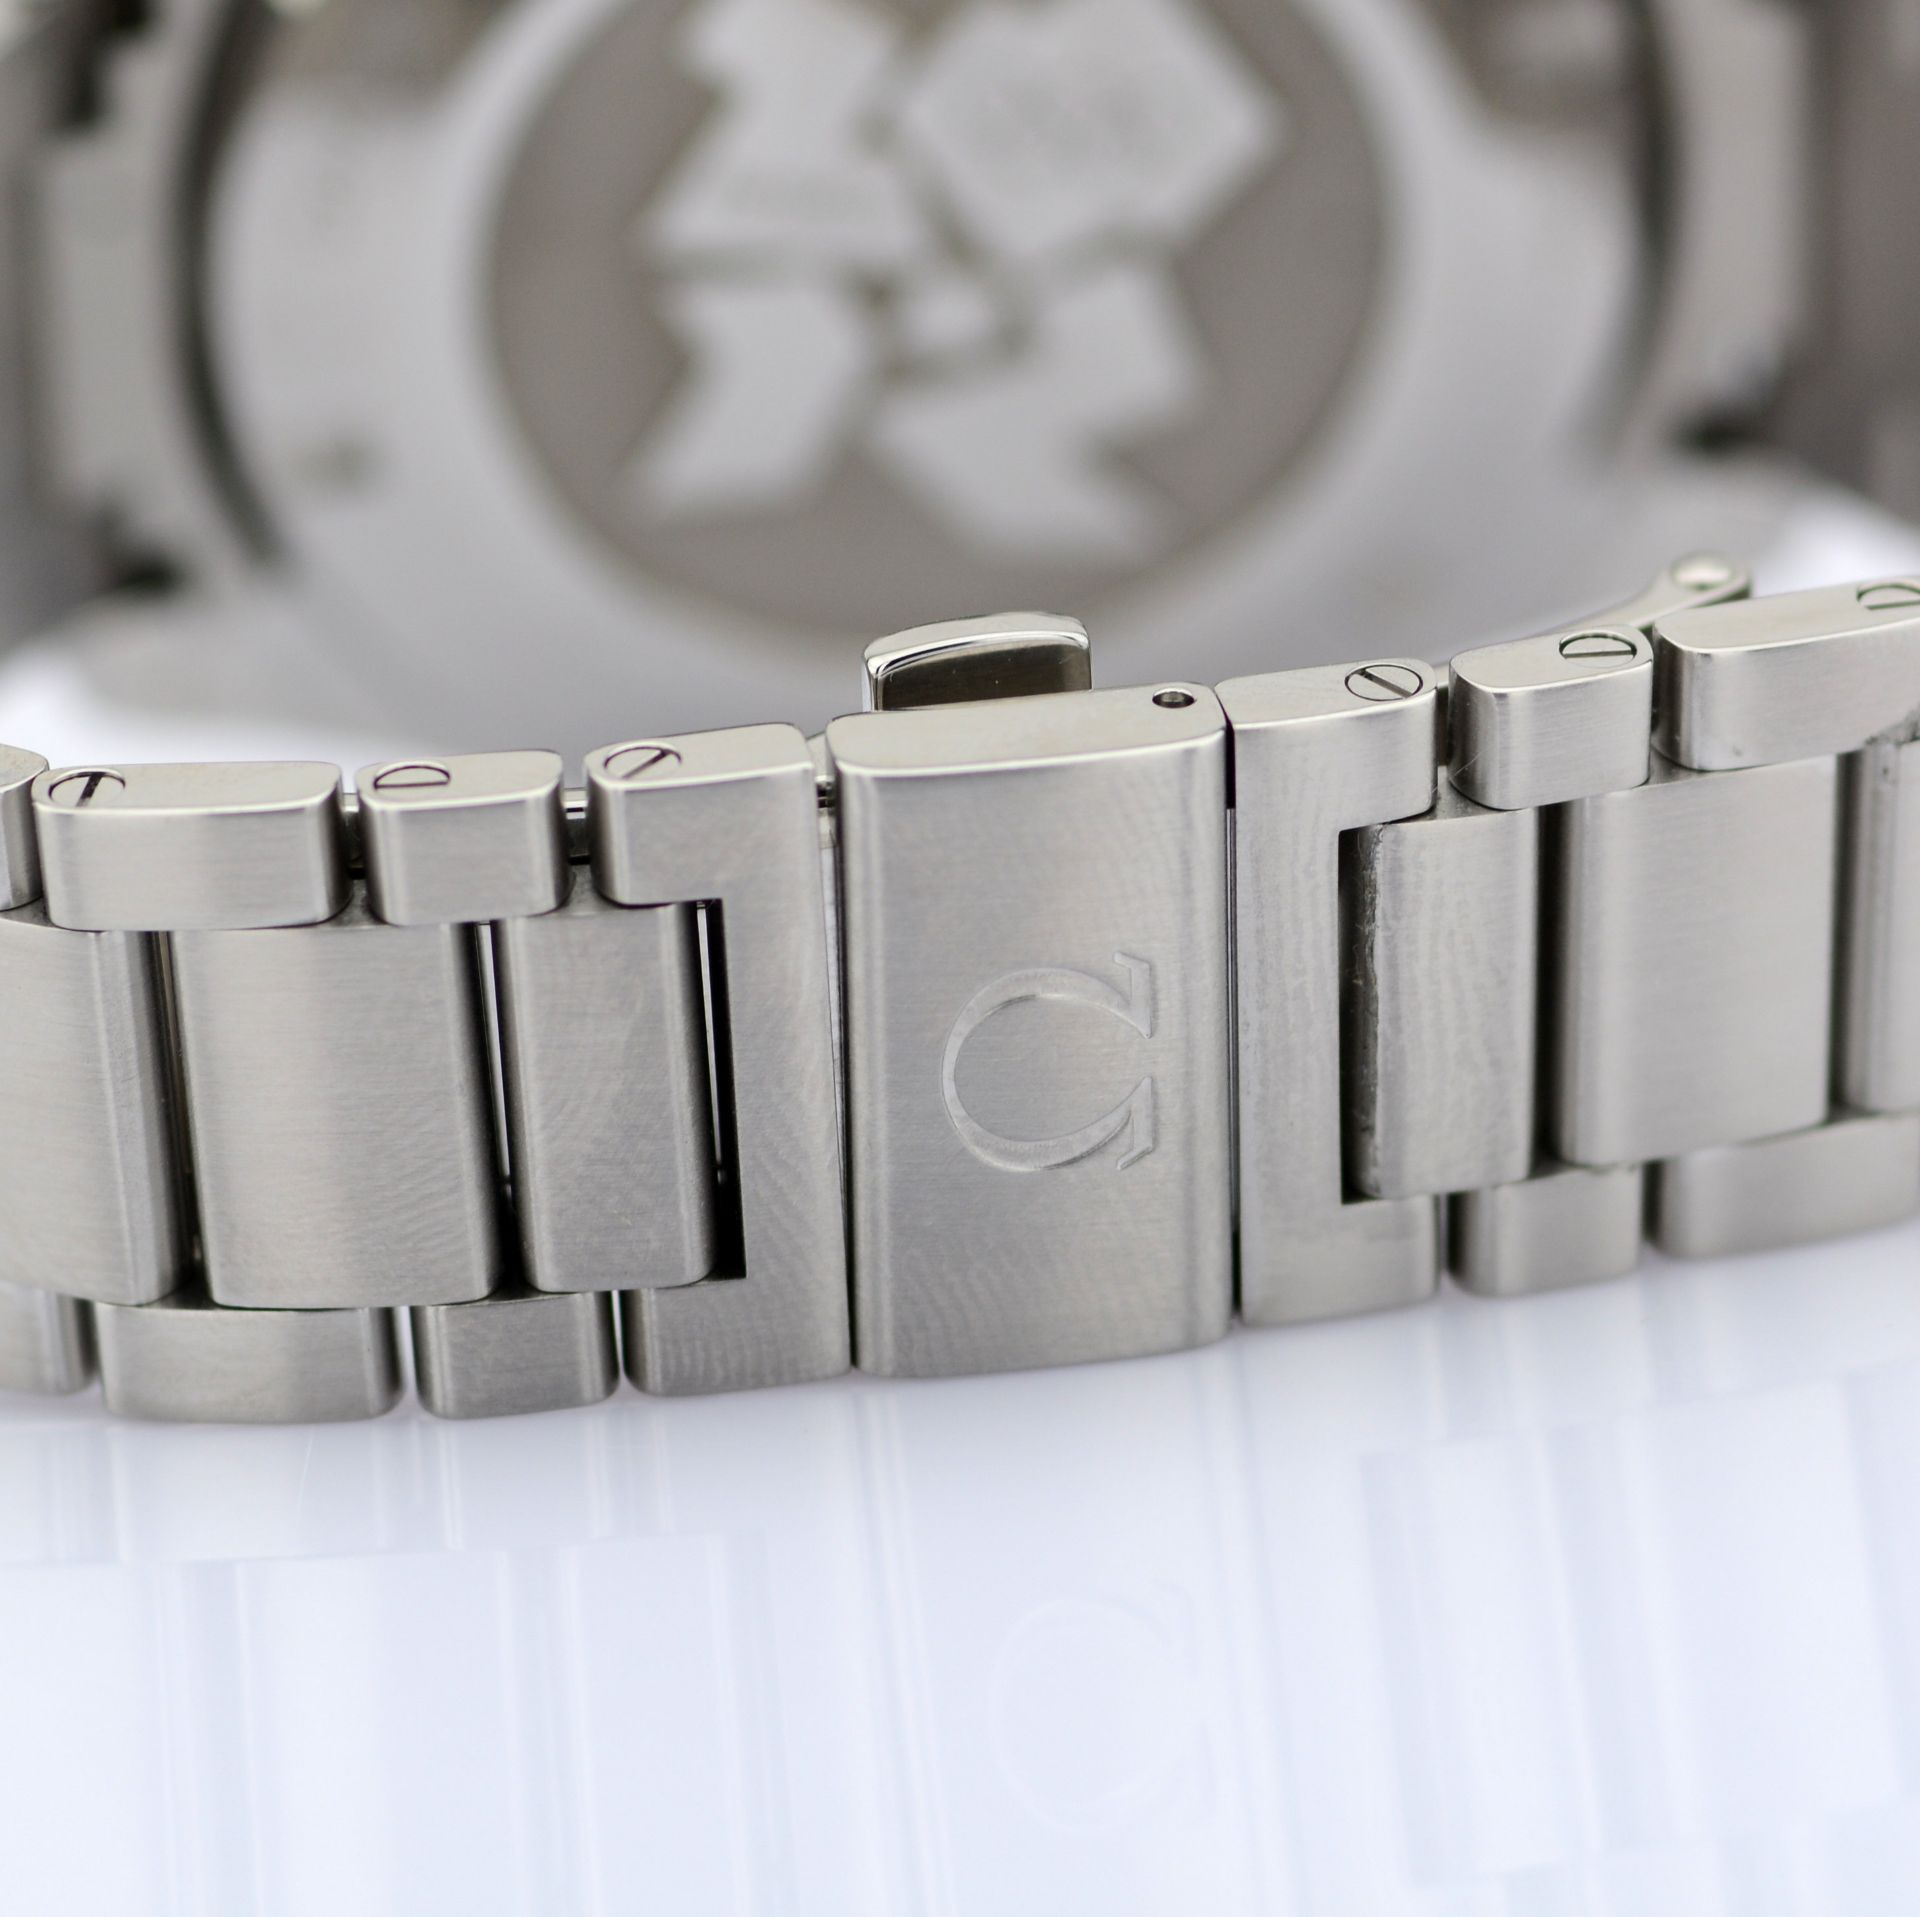 Omega / Seamaster Aqua Terra 44mm Chronograph London Olympics - Gentlmen's Steel Wrist Watch - Image 4 of 7